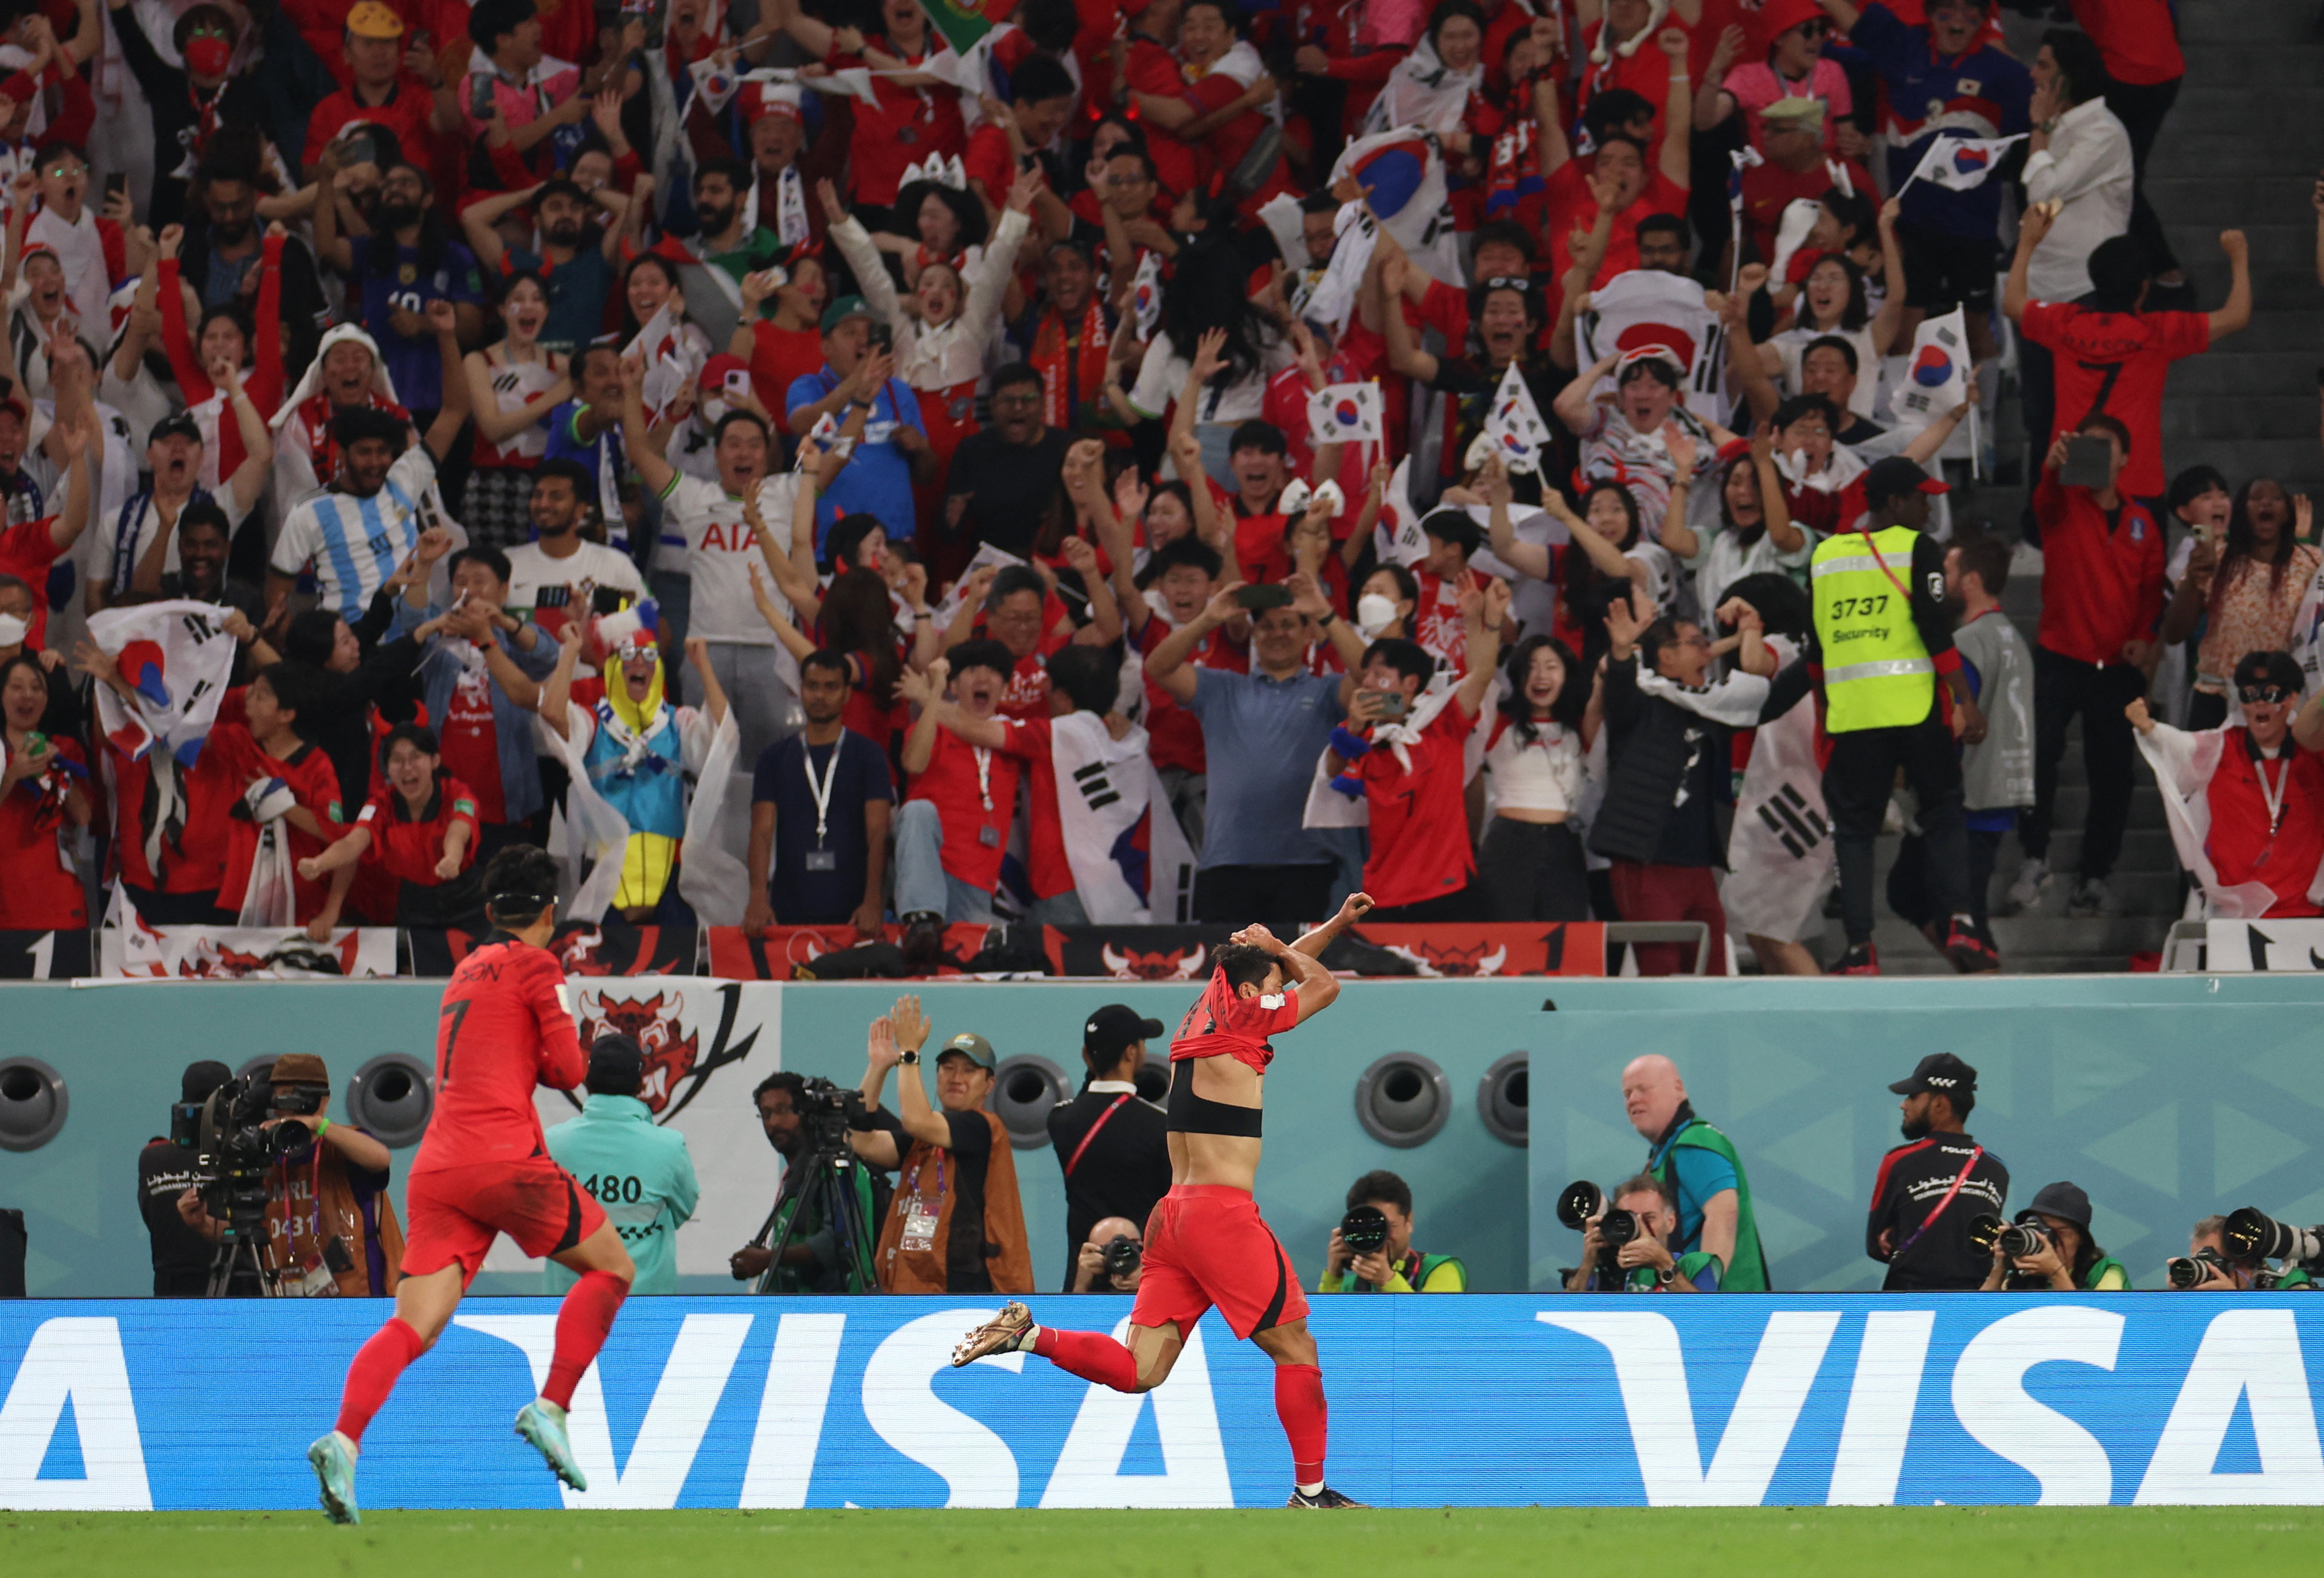 Corea del Sur ganó a Portugal en el último minuto y dejó fuera a Uruguay de Qatar 2022. REUTERS/Pedro Nunes